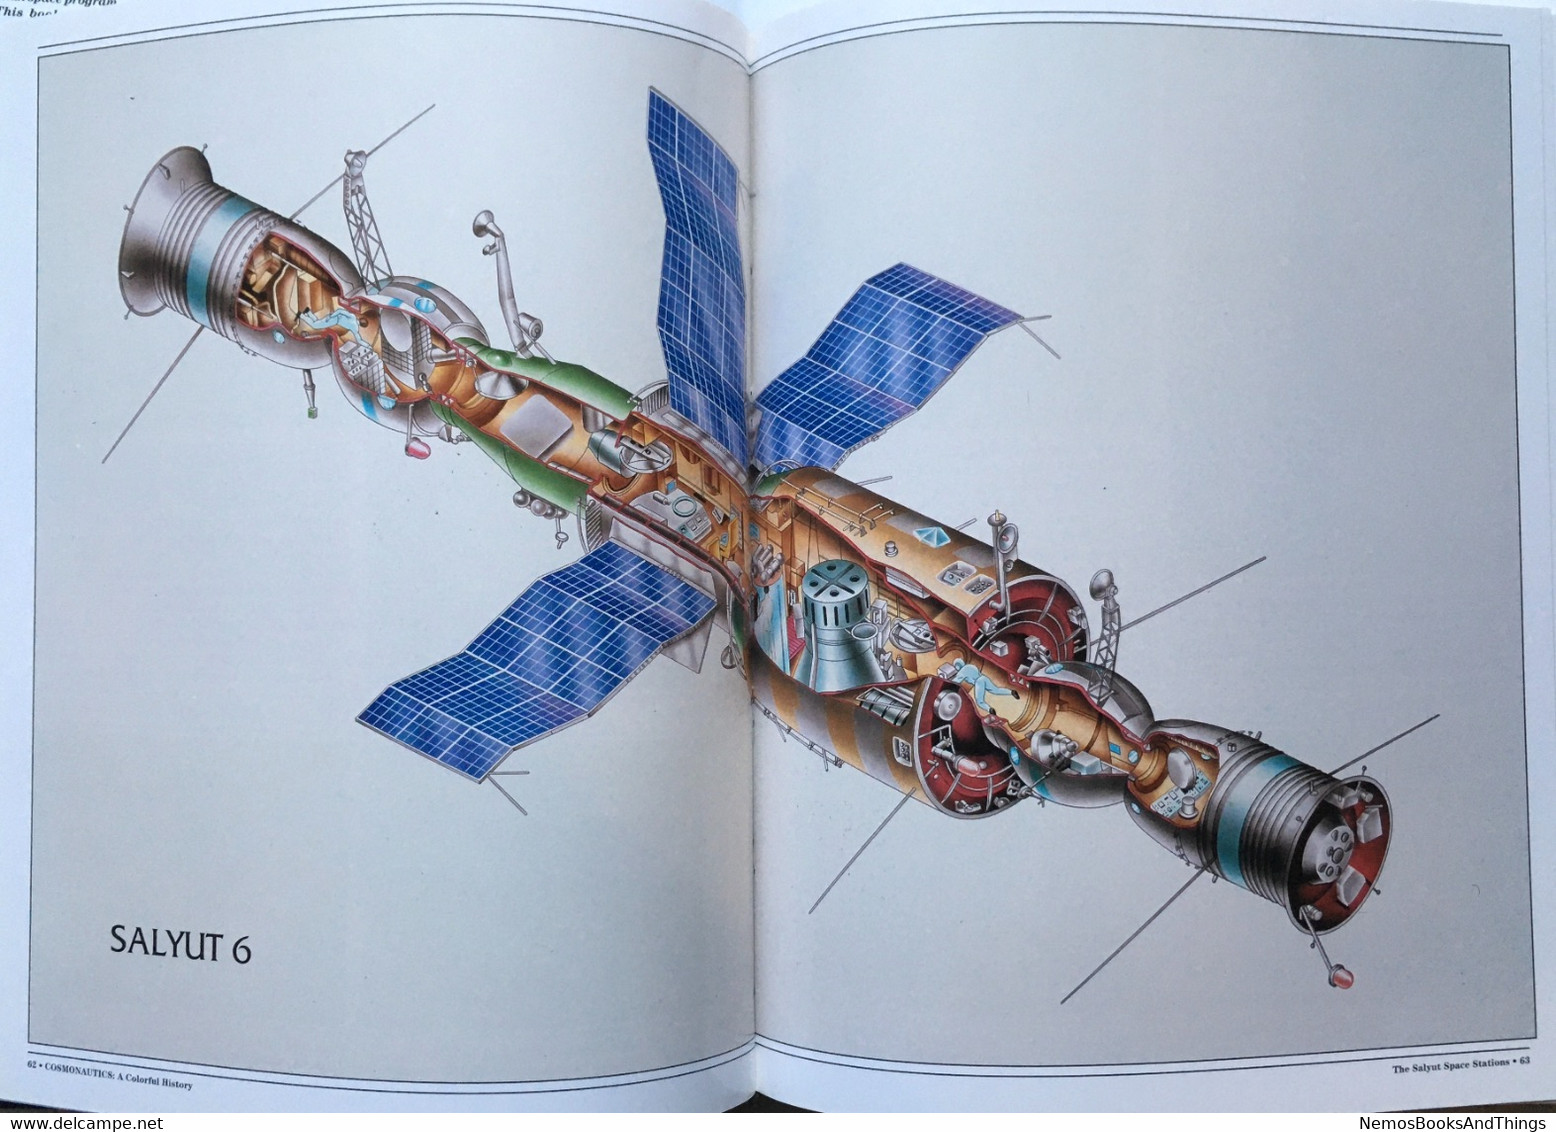 Cosmonautics, a colorful history + 3 posters - Dr. Wayne - R. Matson - 1994 - Space Program - USSR - Soviet Russian